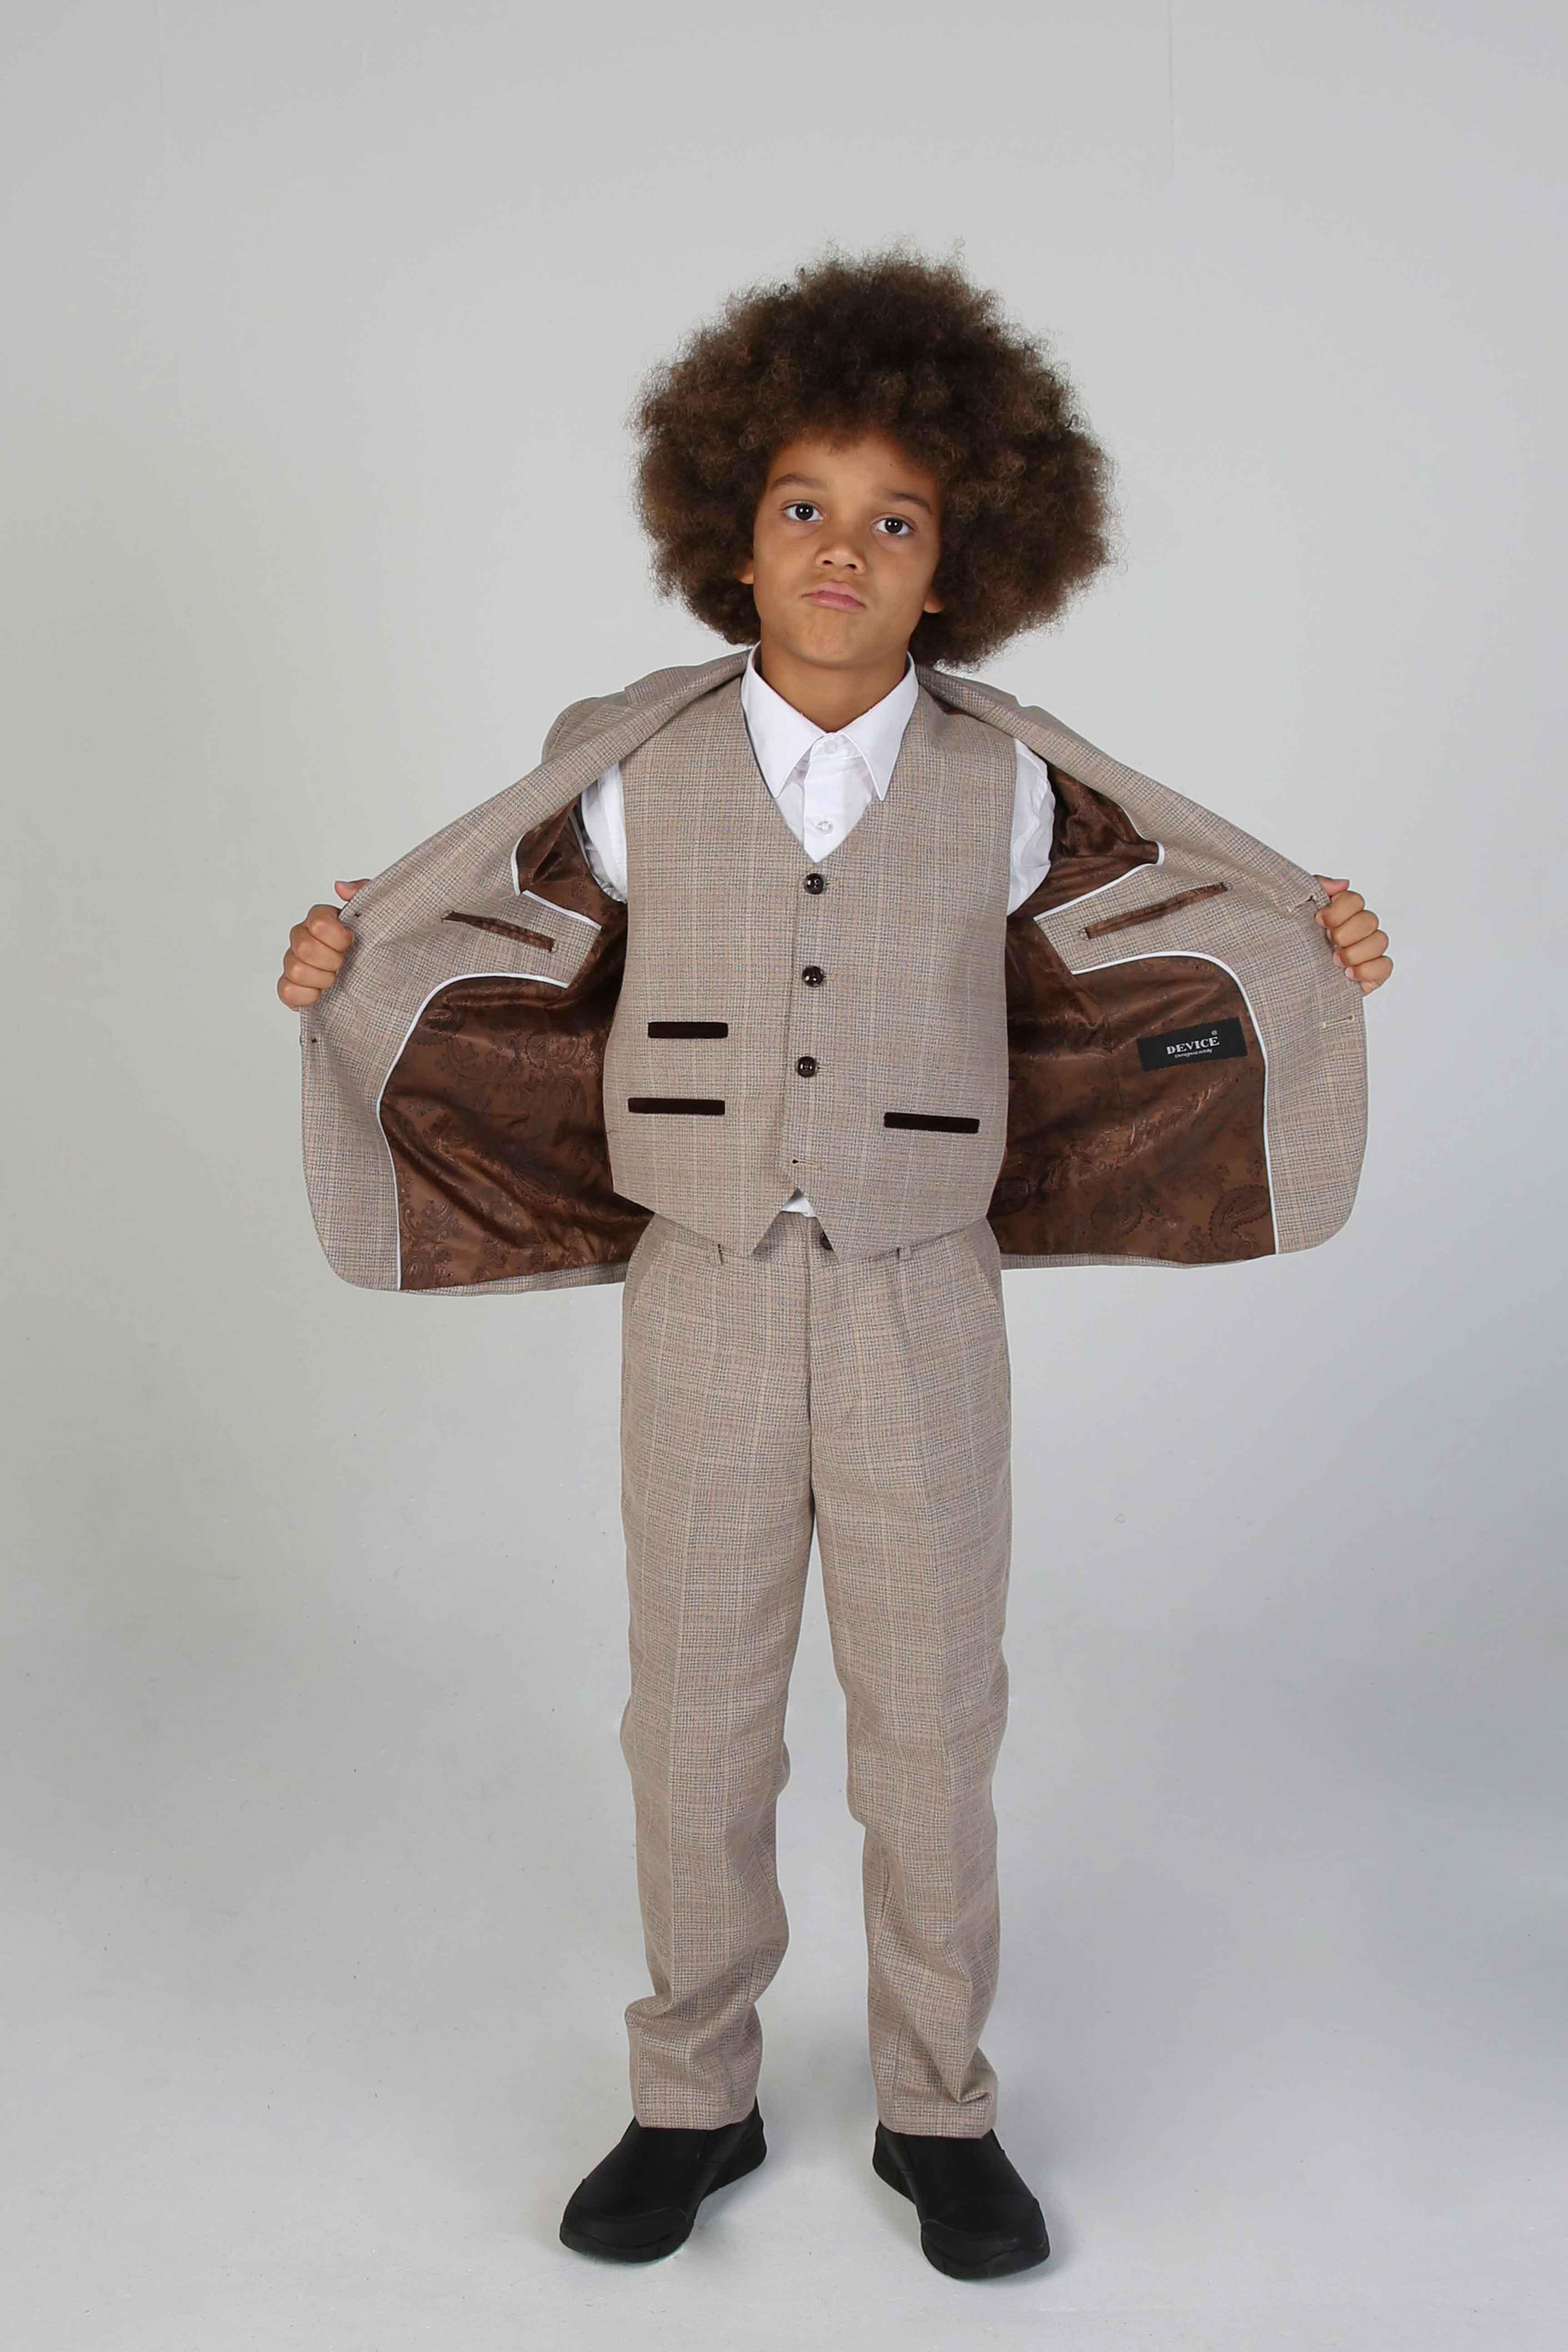 Paul Andrew Children - Device - Boy's Holland Beige Three Piece Suit